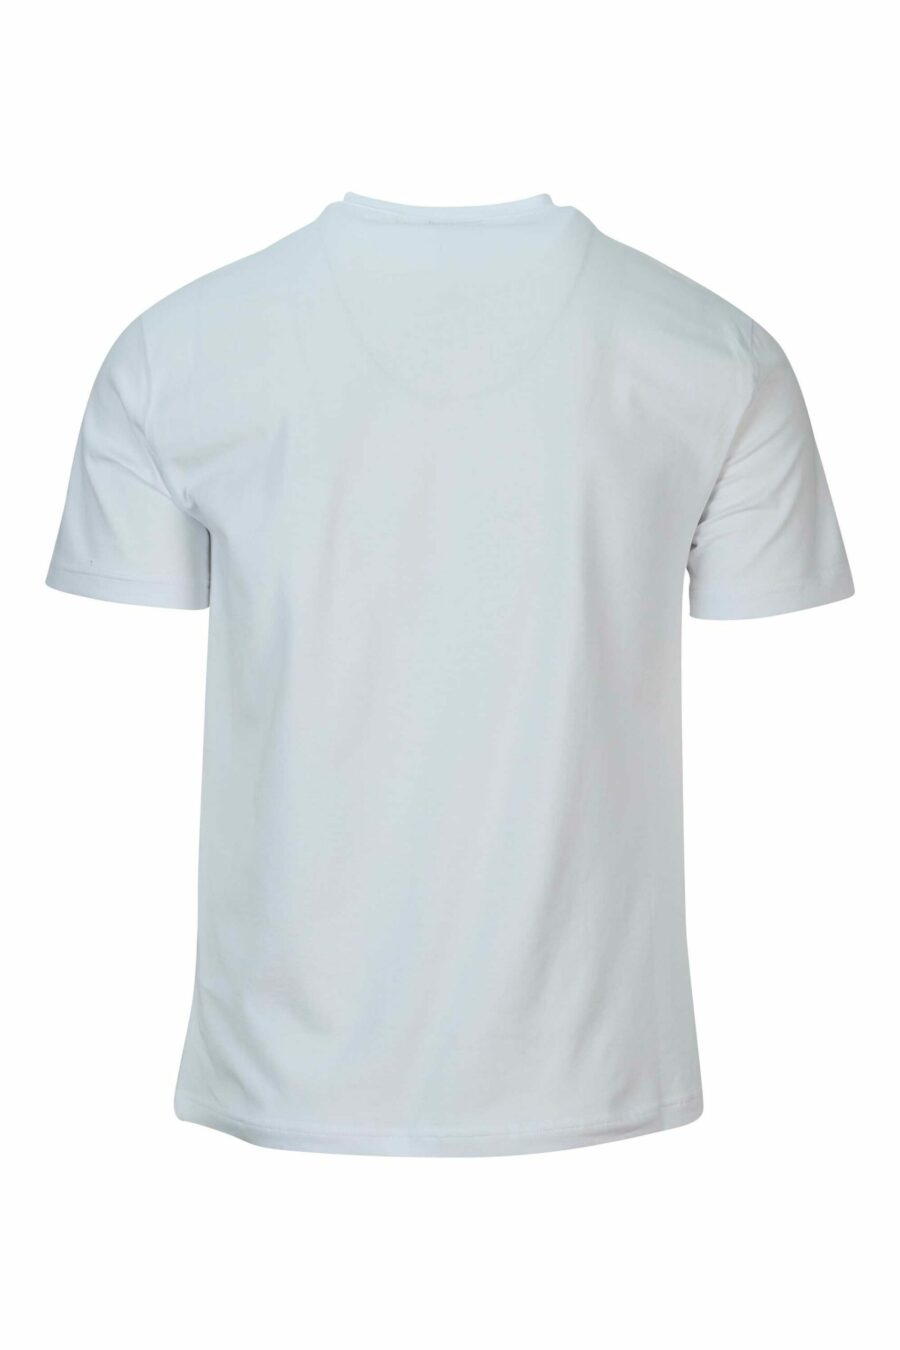 Camiseta blanca con maxilogo "lux identity" plateado neón - 8057970672319 1 scaled